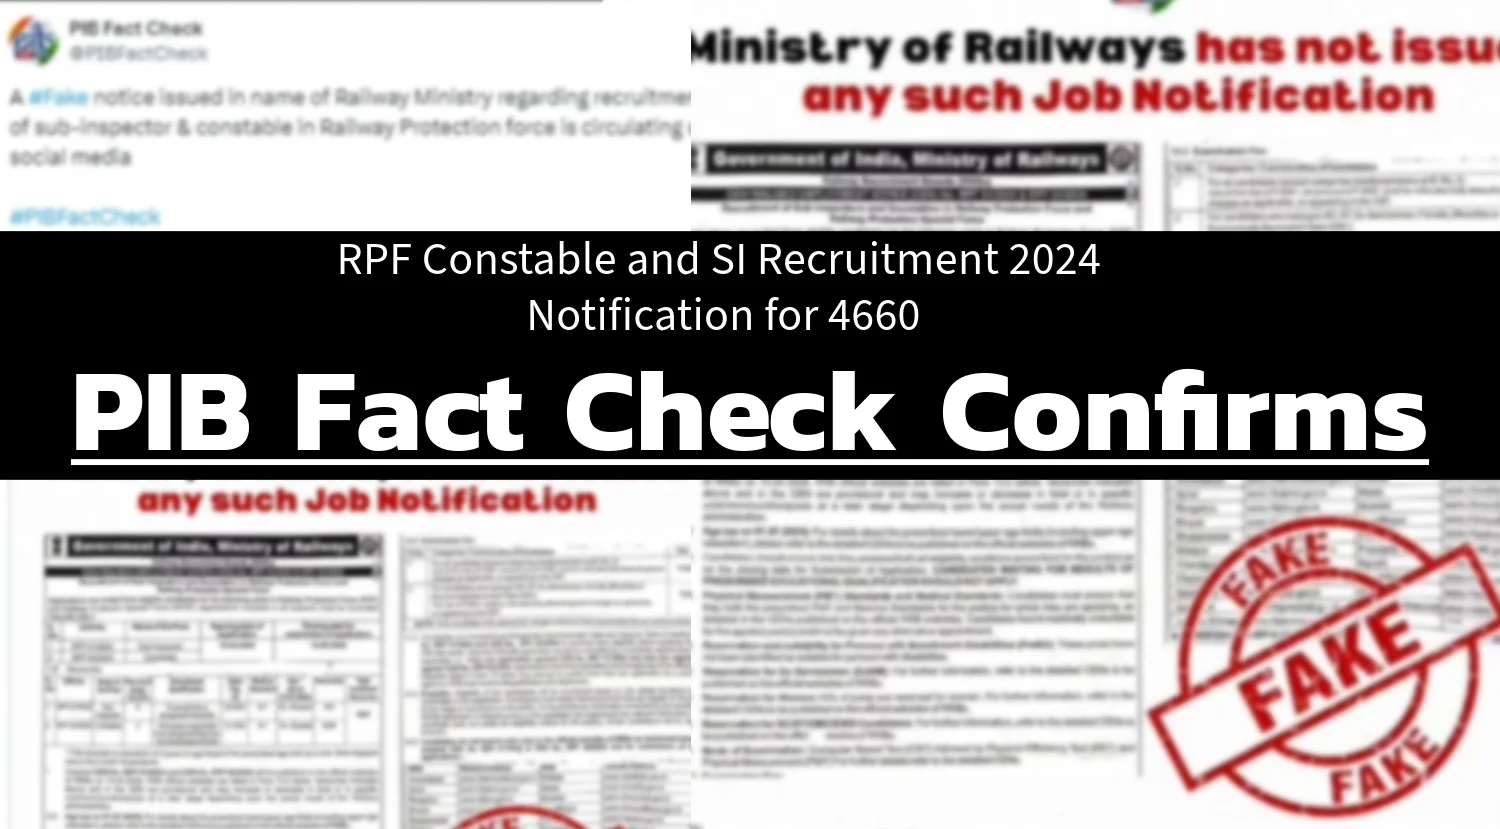 RPF Notification 2024 for 4660 Vacancies is Fake, Confirms PIB Fact Check